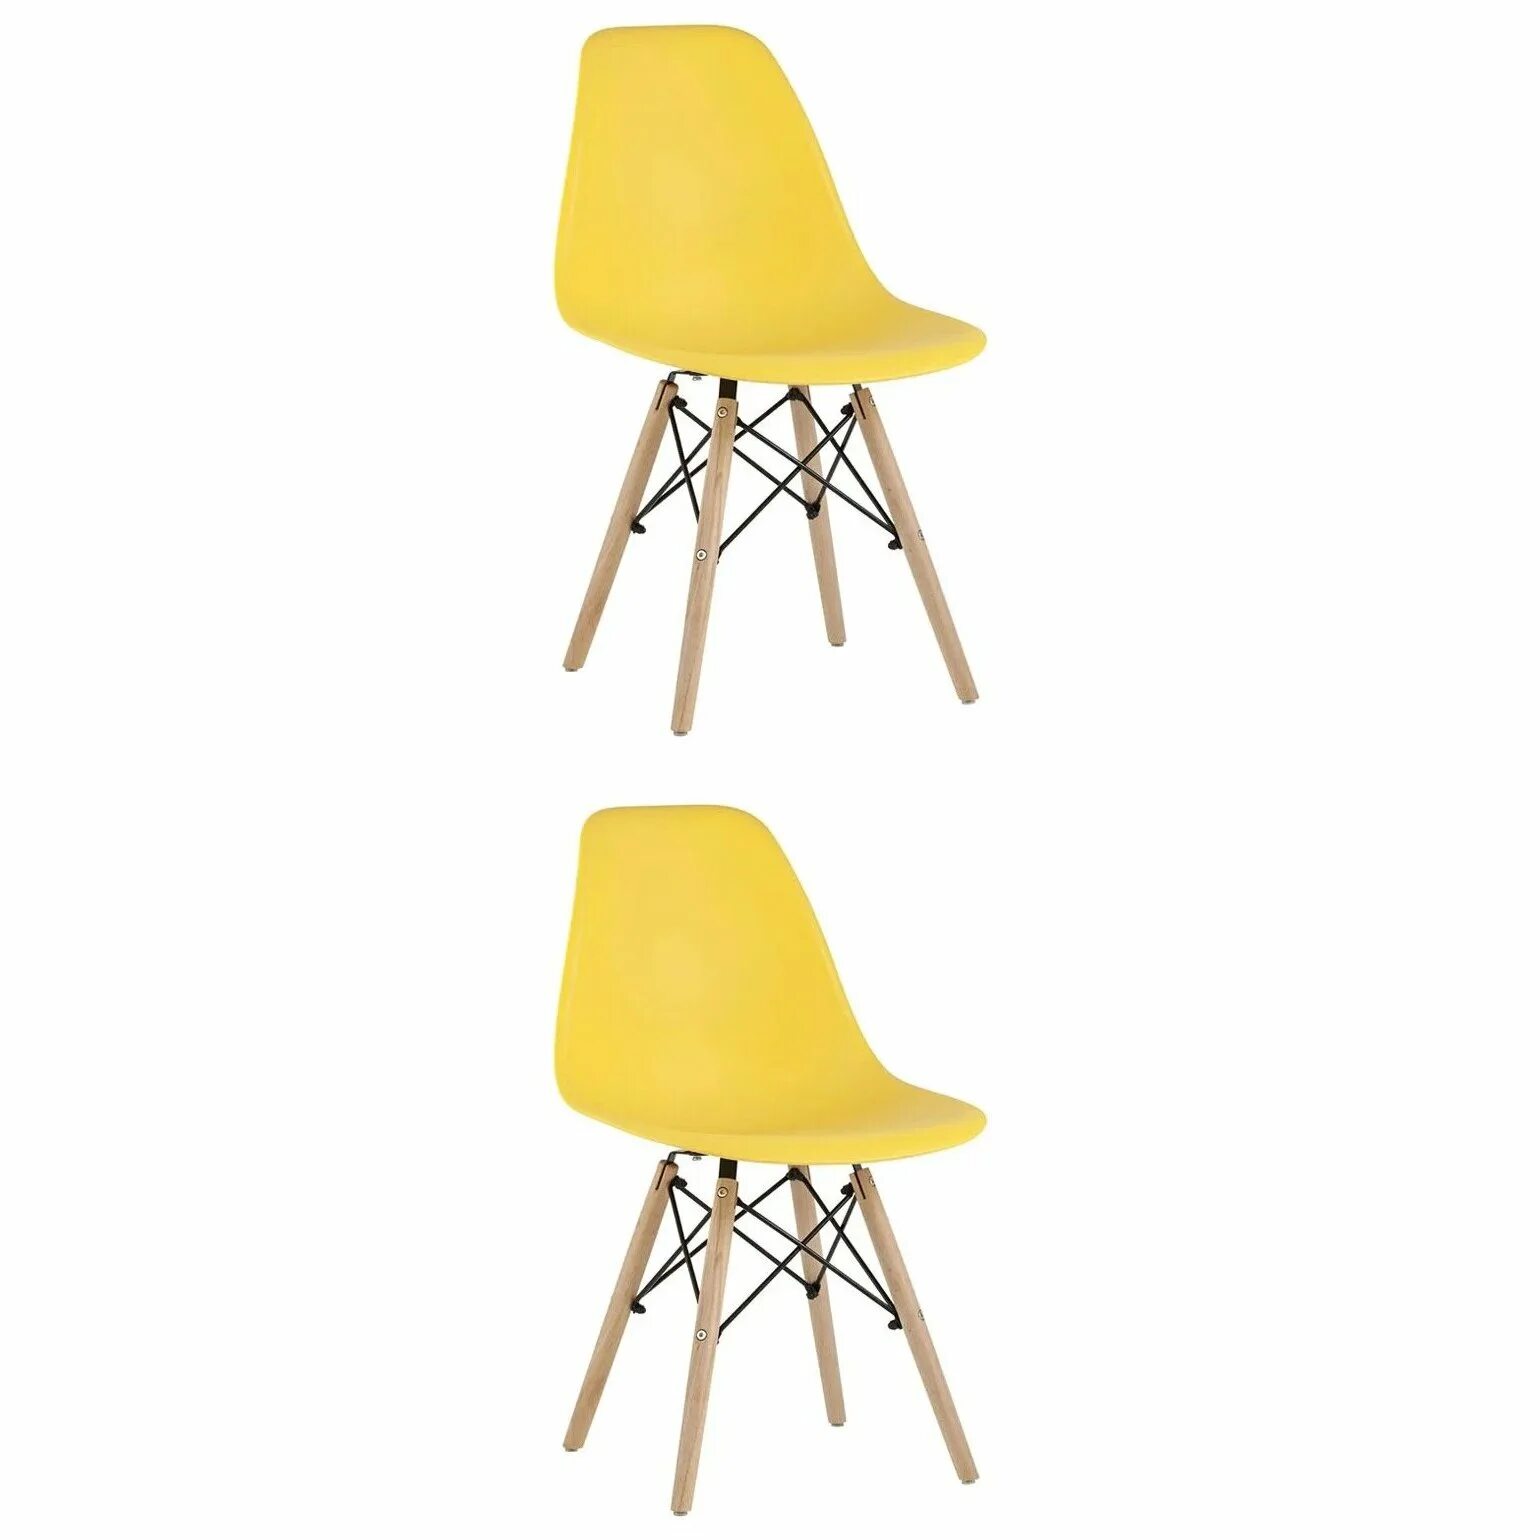 Стул без запаха. Комплект стульев DSW Style, желтый, 4шт.. Стул Stool Group Eames DSW. Стул Style DSW желтый 4 шт.